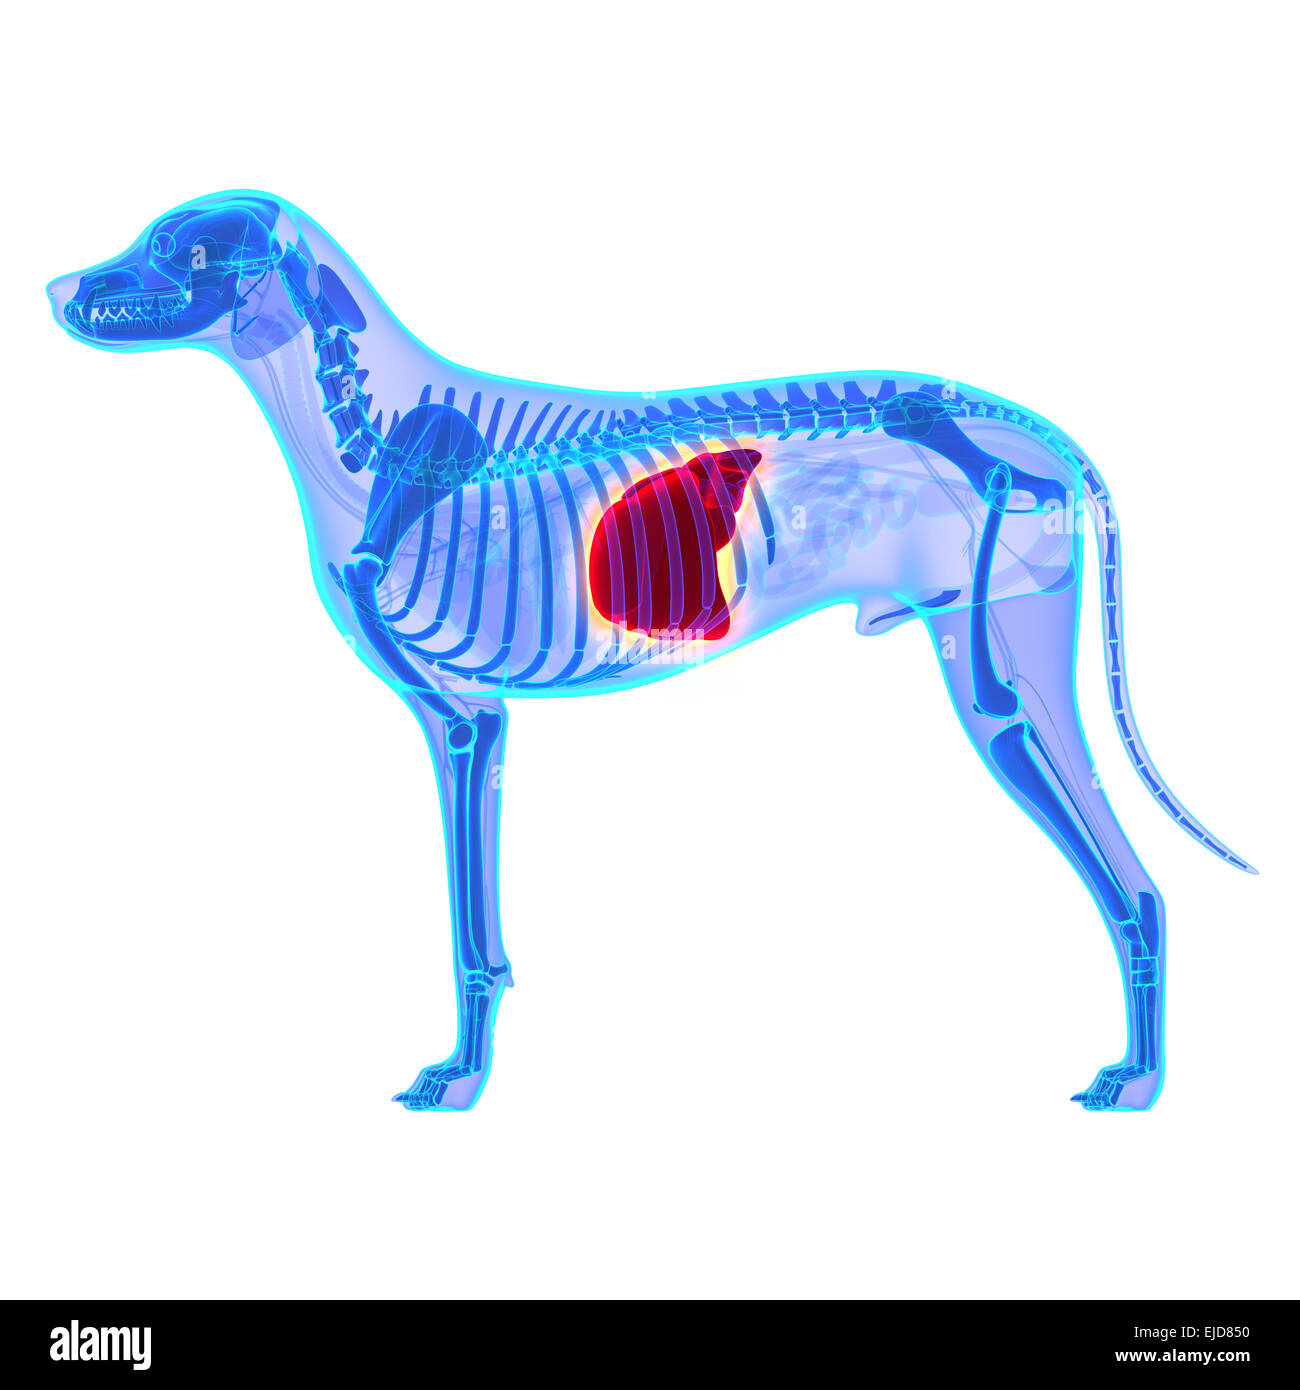 Hund Leber - Canis Lupus Familiaris Anatomie - isoliert auf weiss  Stockfotografie - Alamy